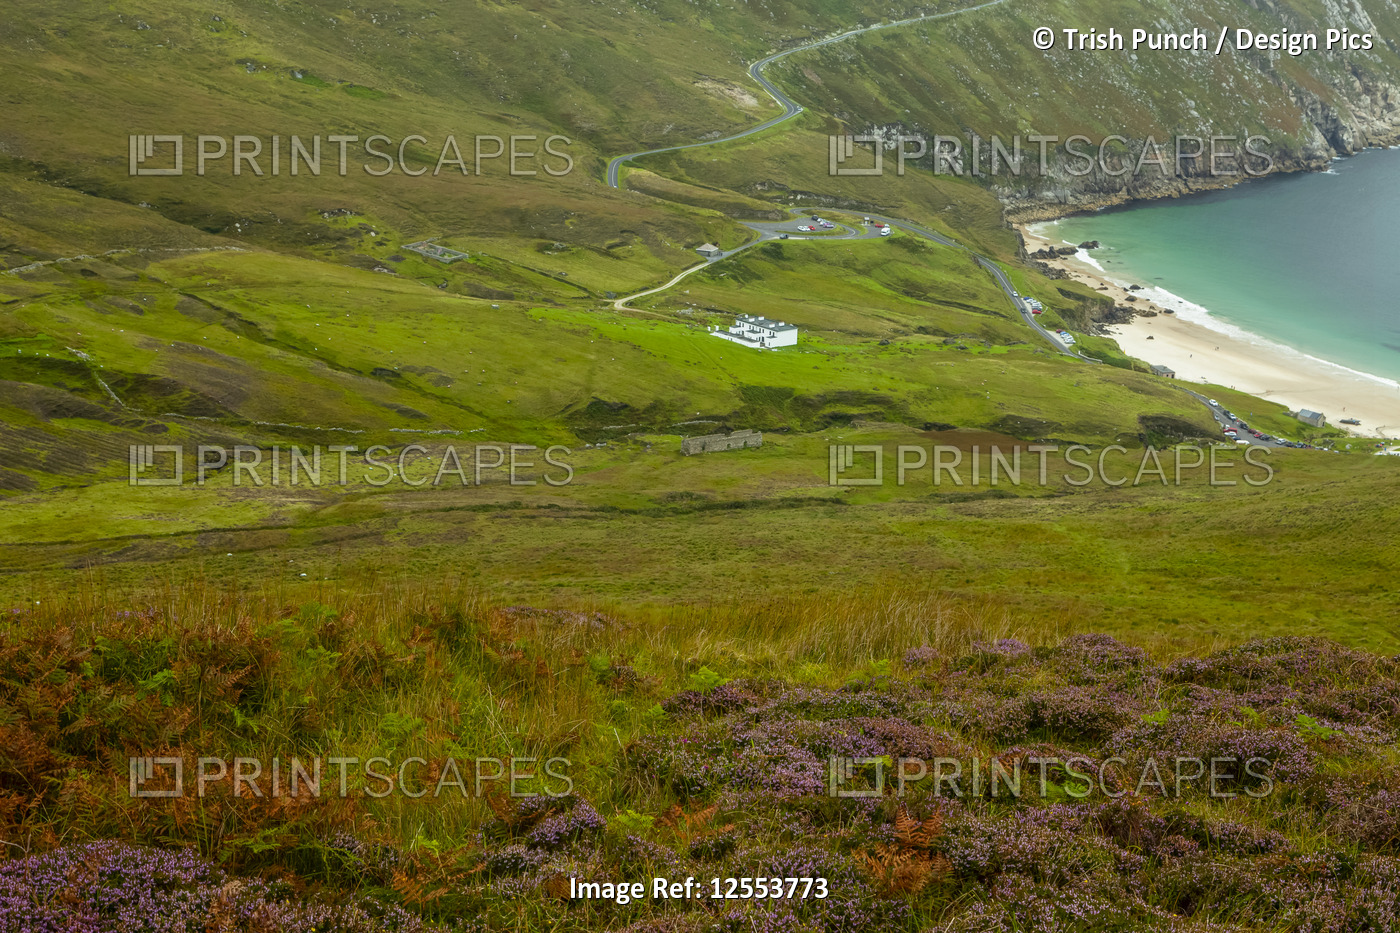 Lush grassy hills and a beach along the coast of Ireland; Ireland